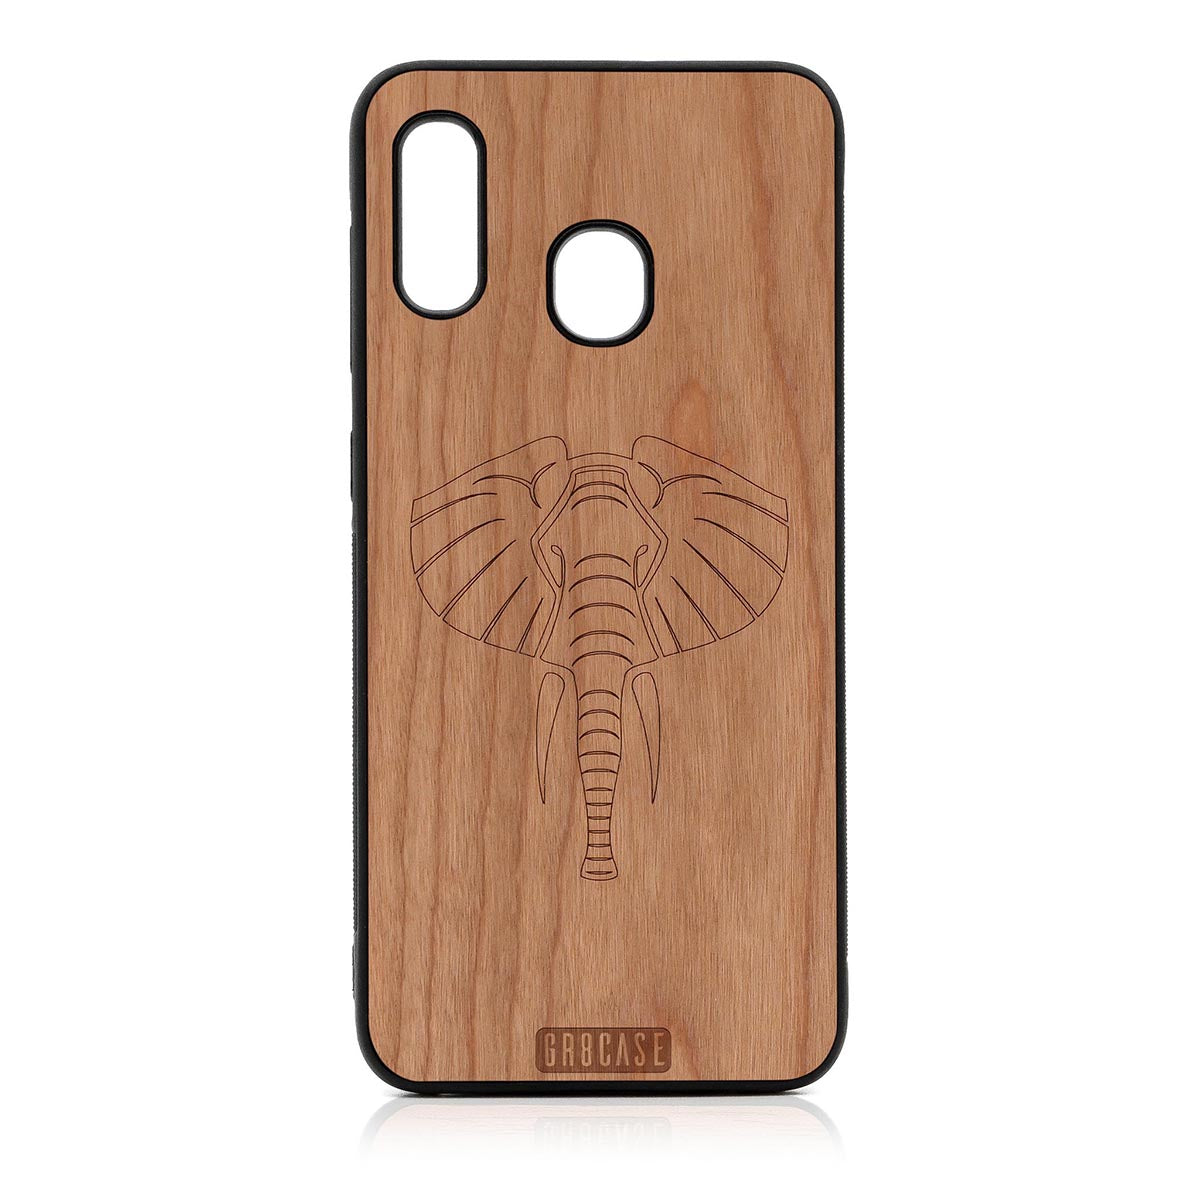 Elephant Design Wood Case For Samsung Galaxy A20 by GR8CASE